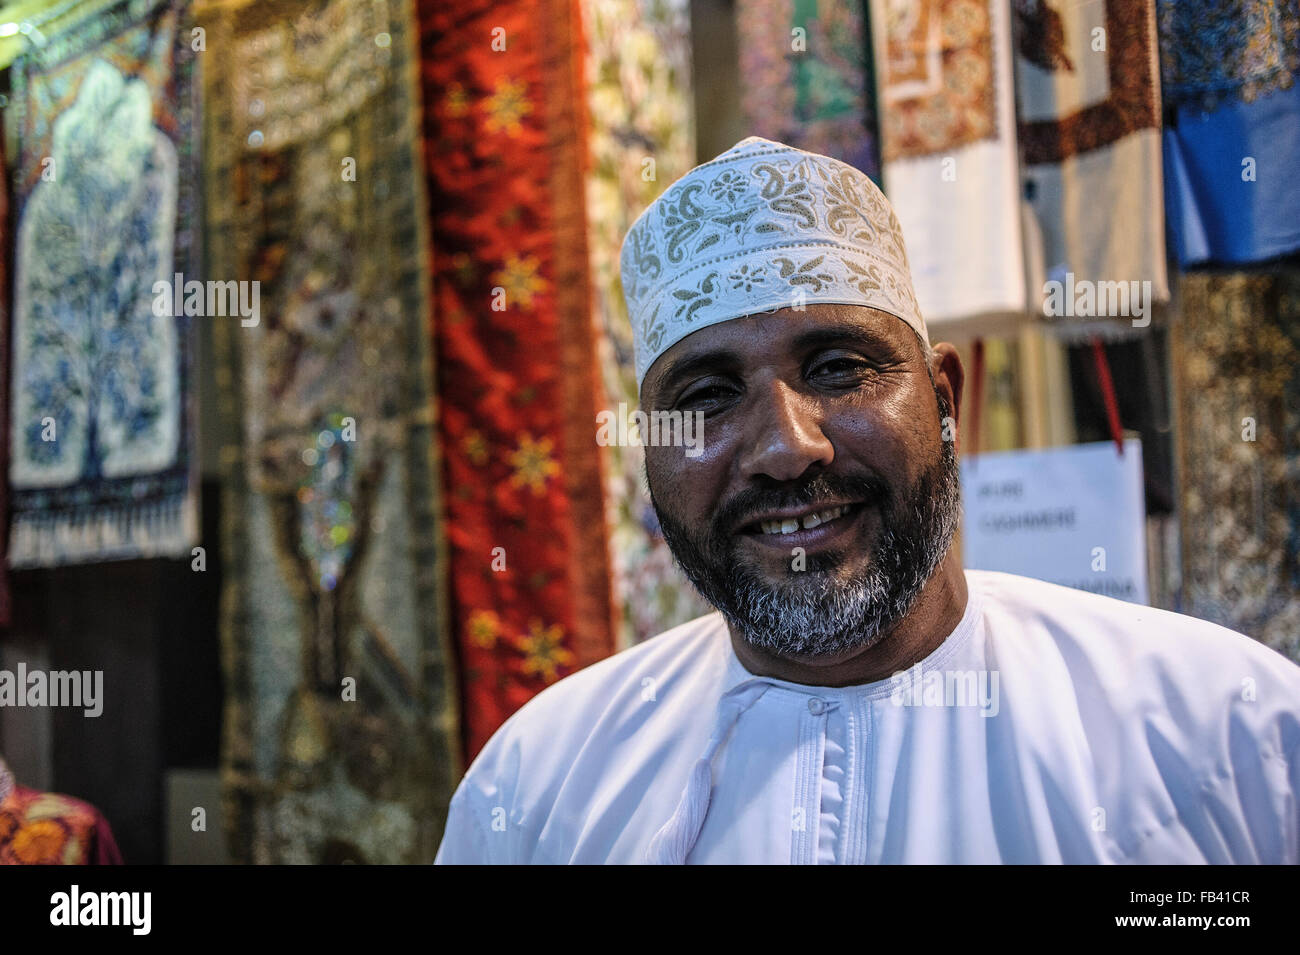 Mutrah Souq, Muscat, Oman Stock Photo